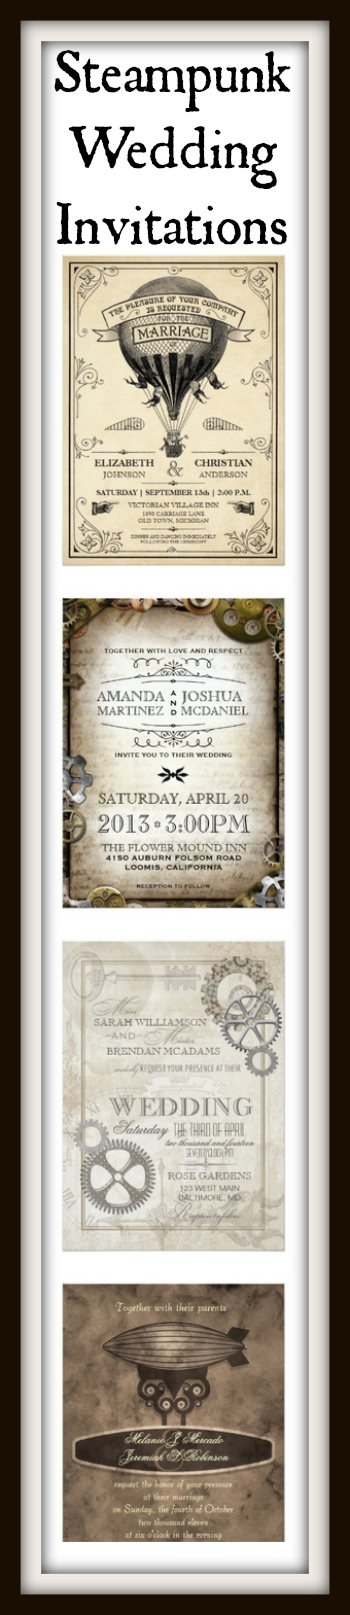 Steampunk Wedding Invitations